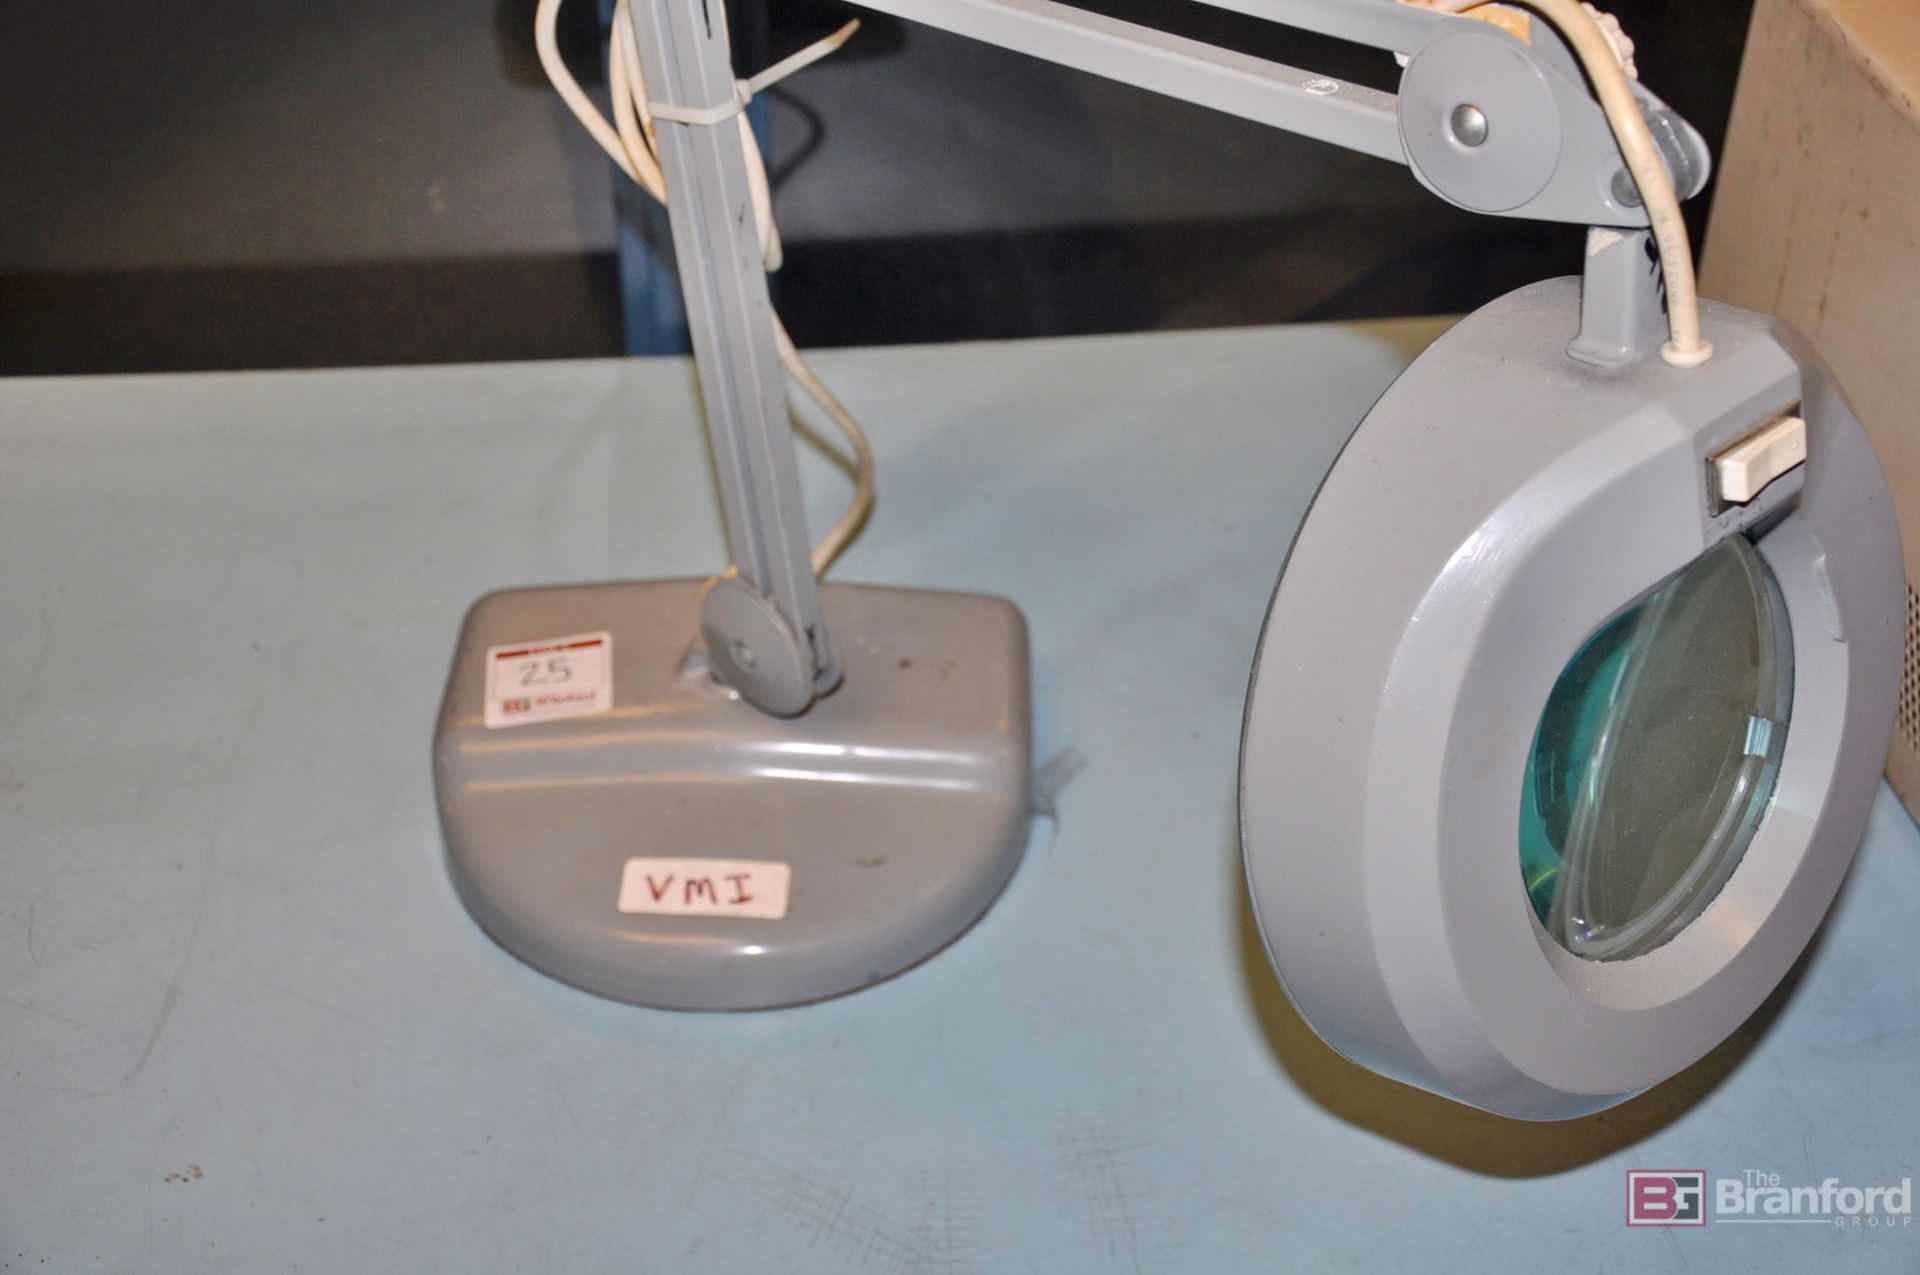 Inspection lamp, Luxo magnifier